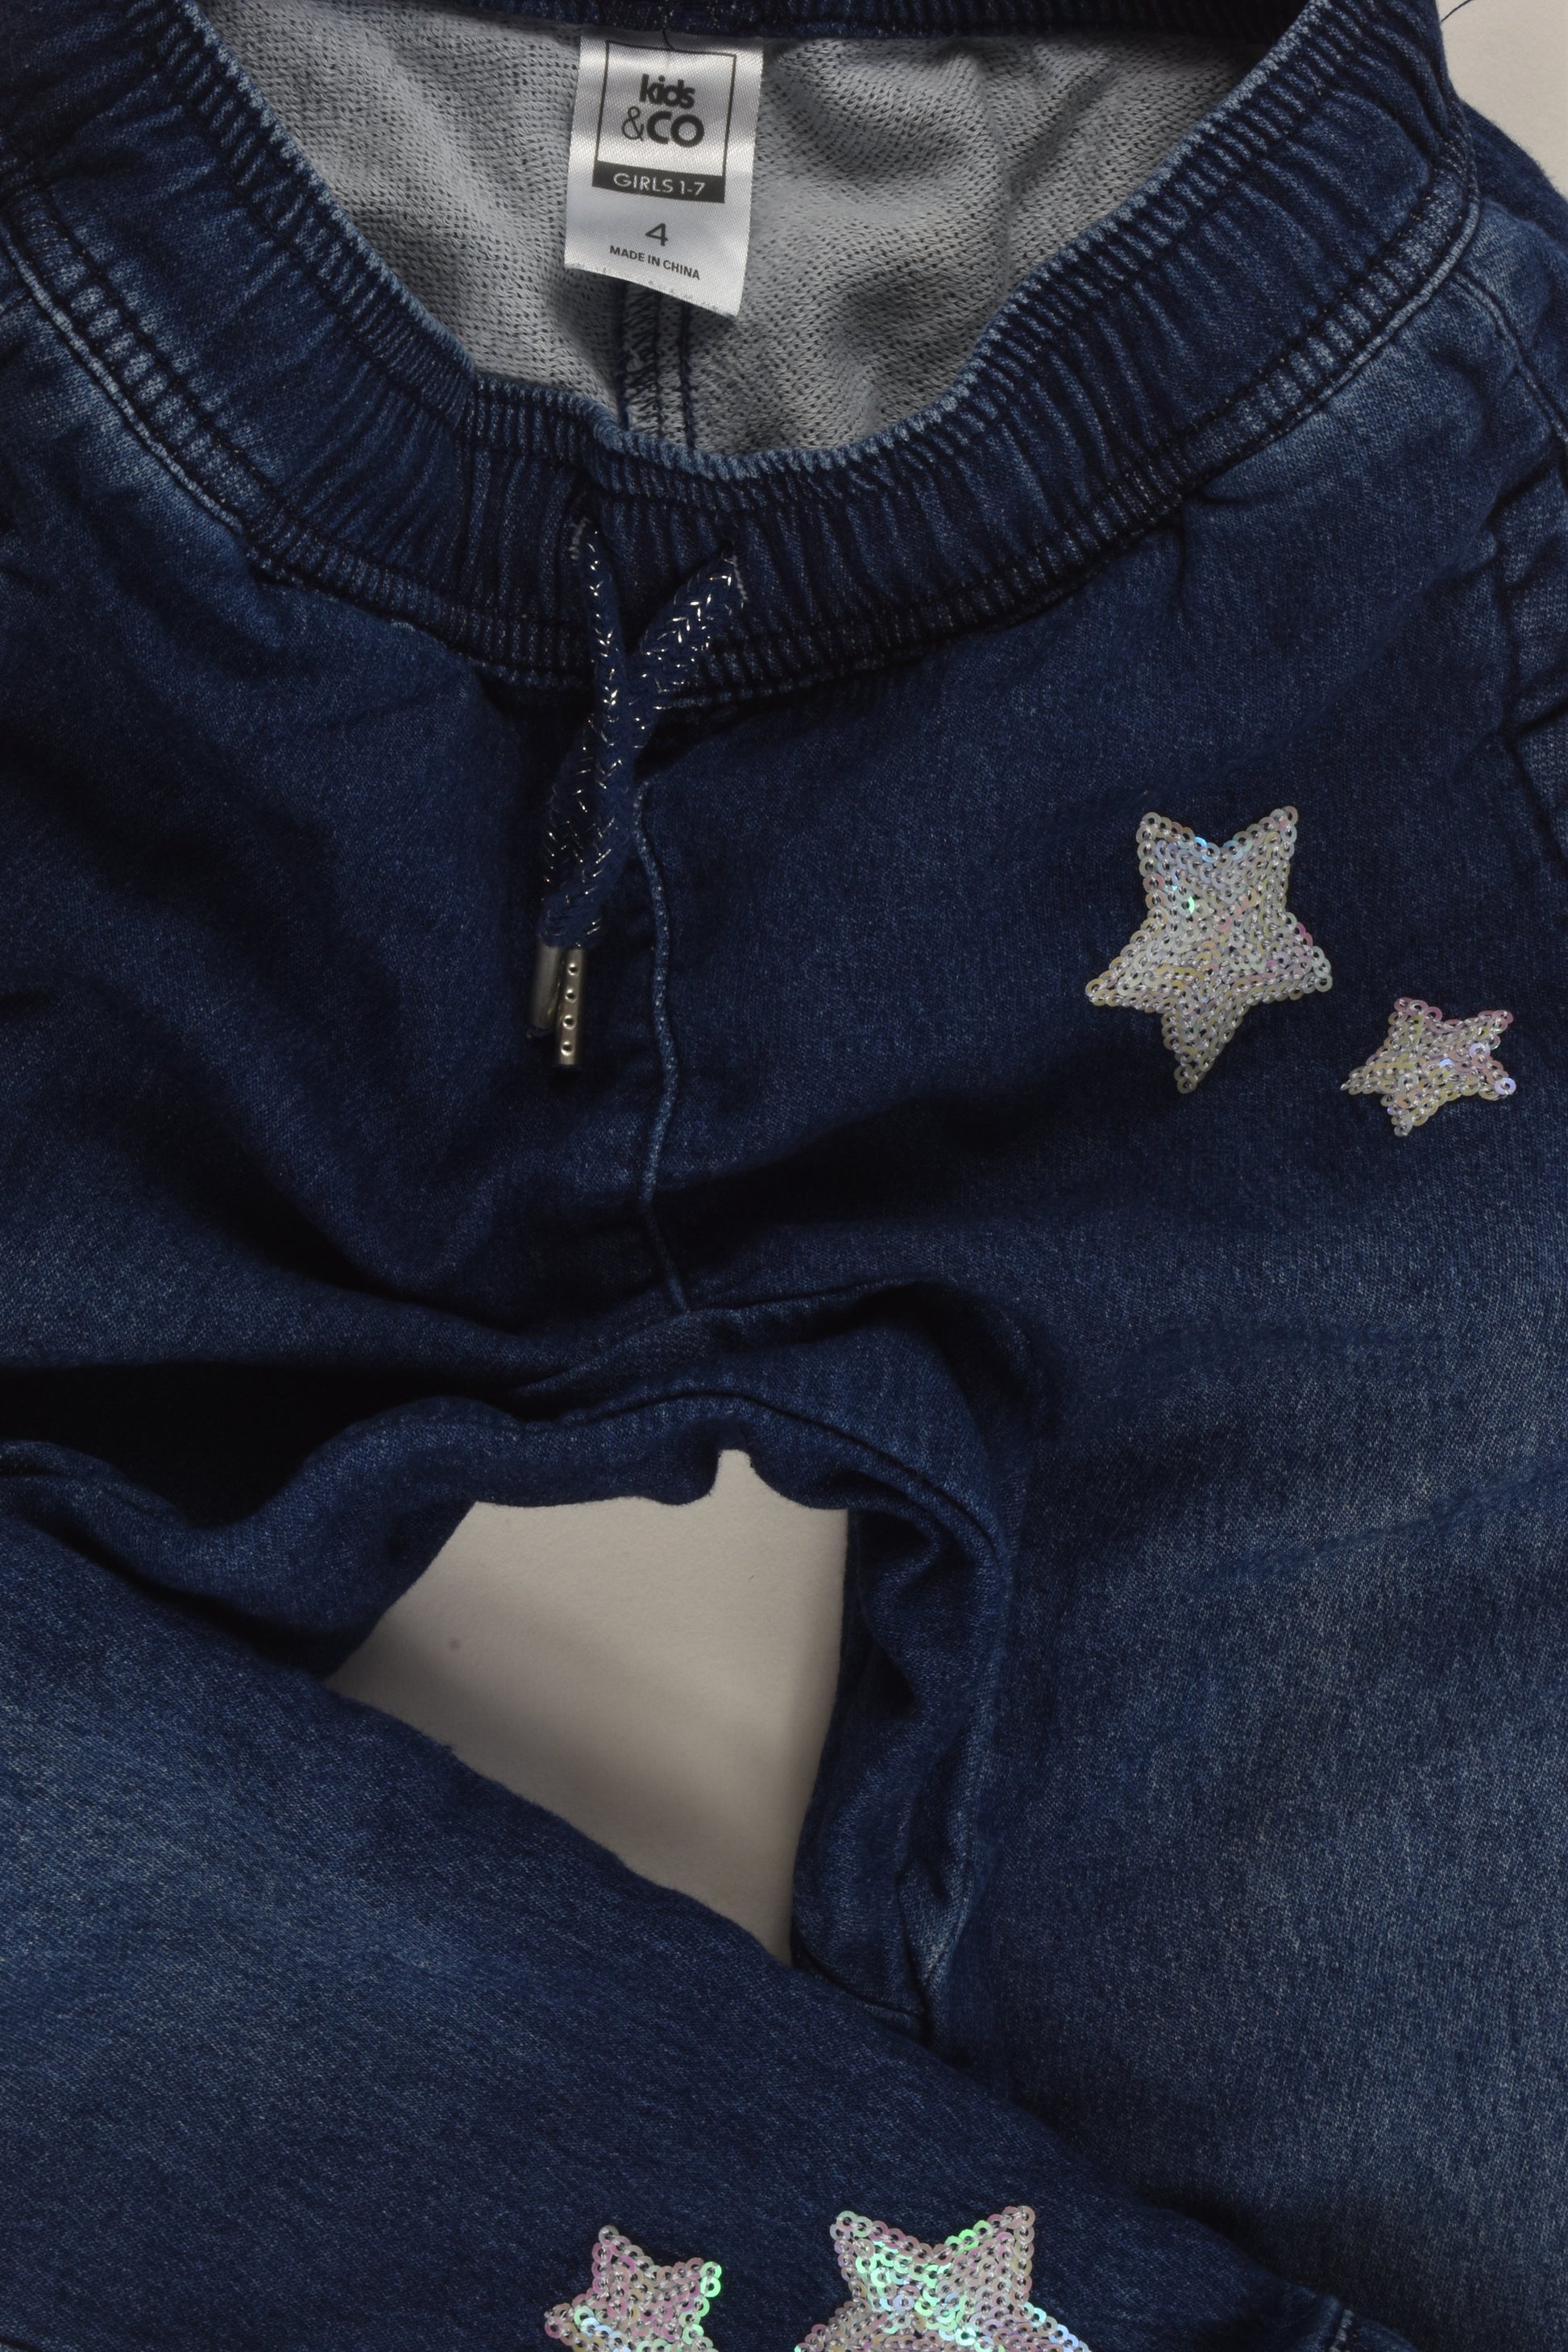 Kids & Co Size 4 Star Sequins Denim Pants